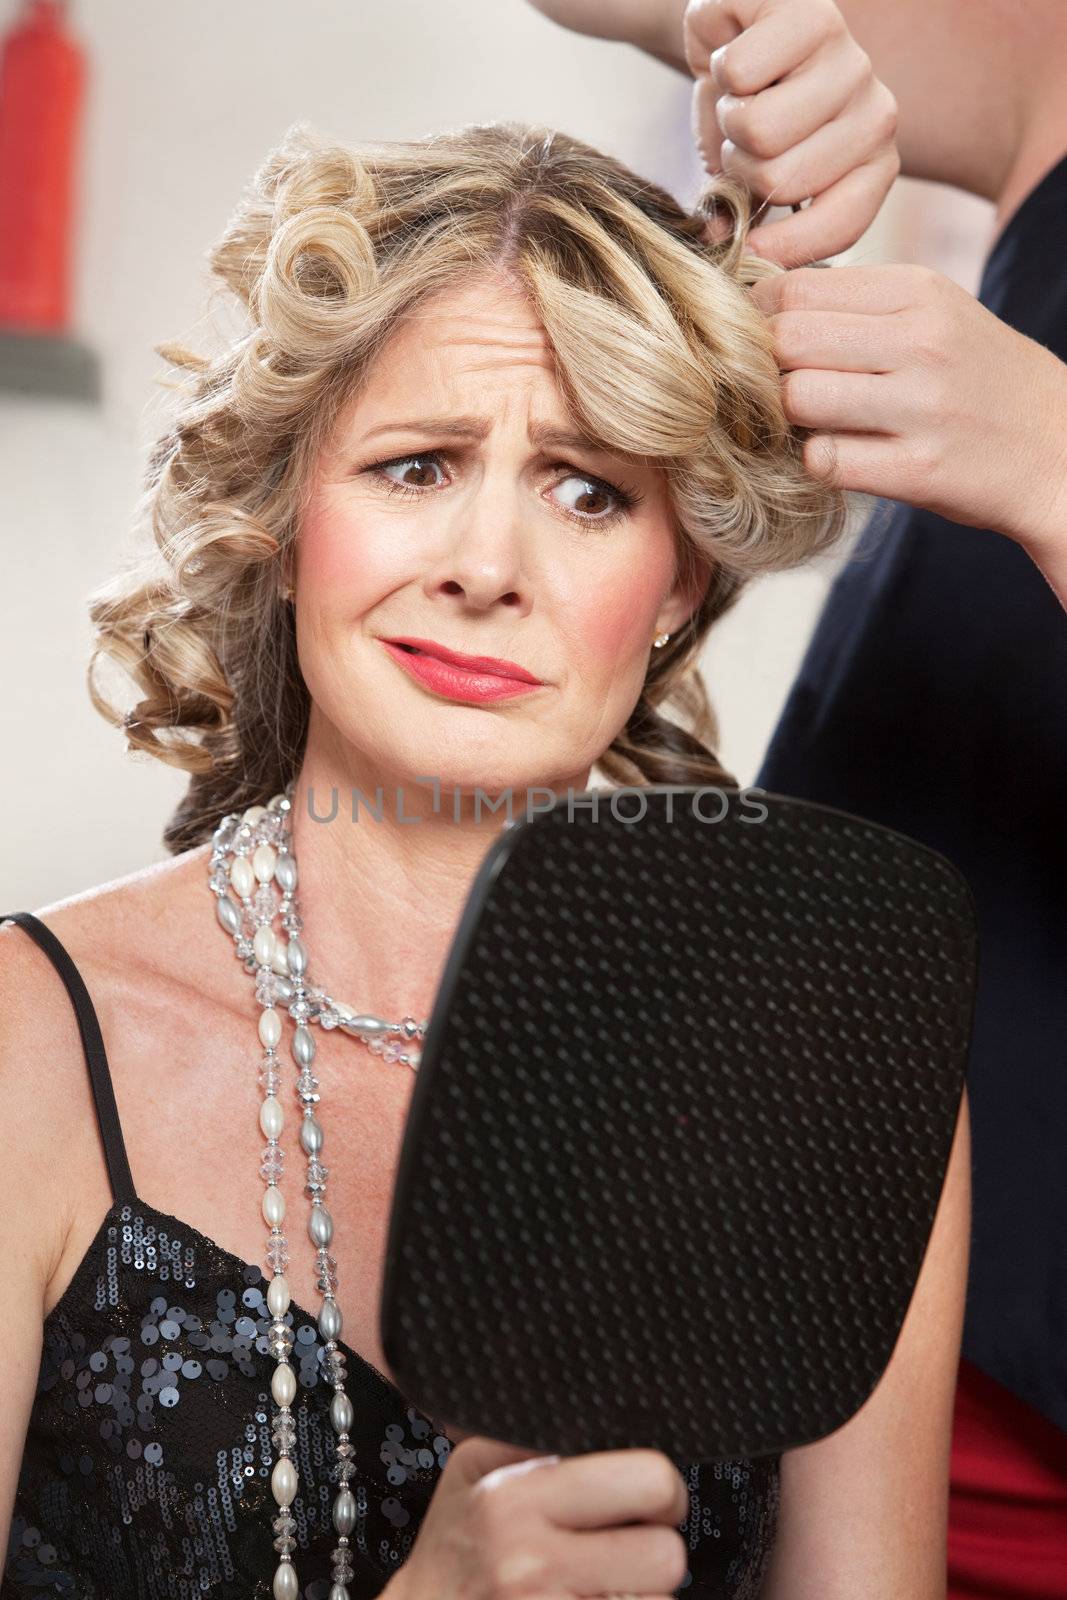 Dissatisfied pretty woman in salon holding mirror